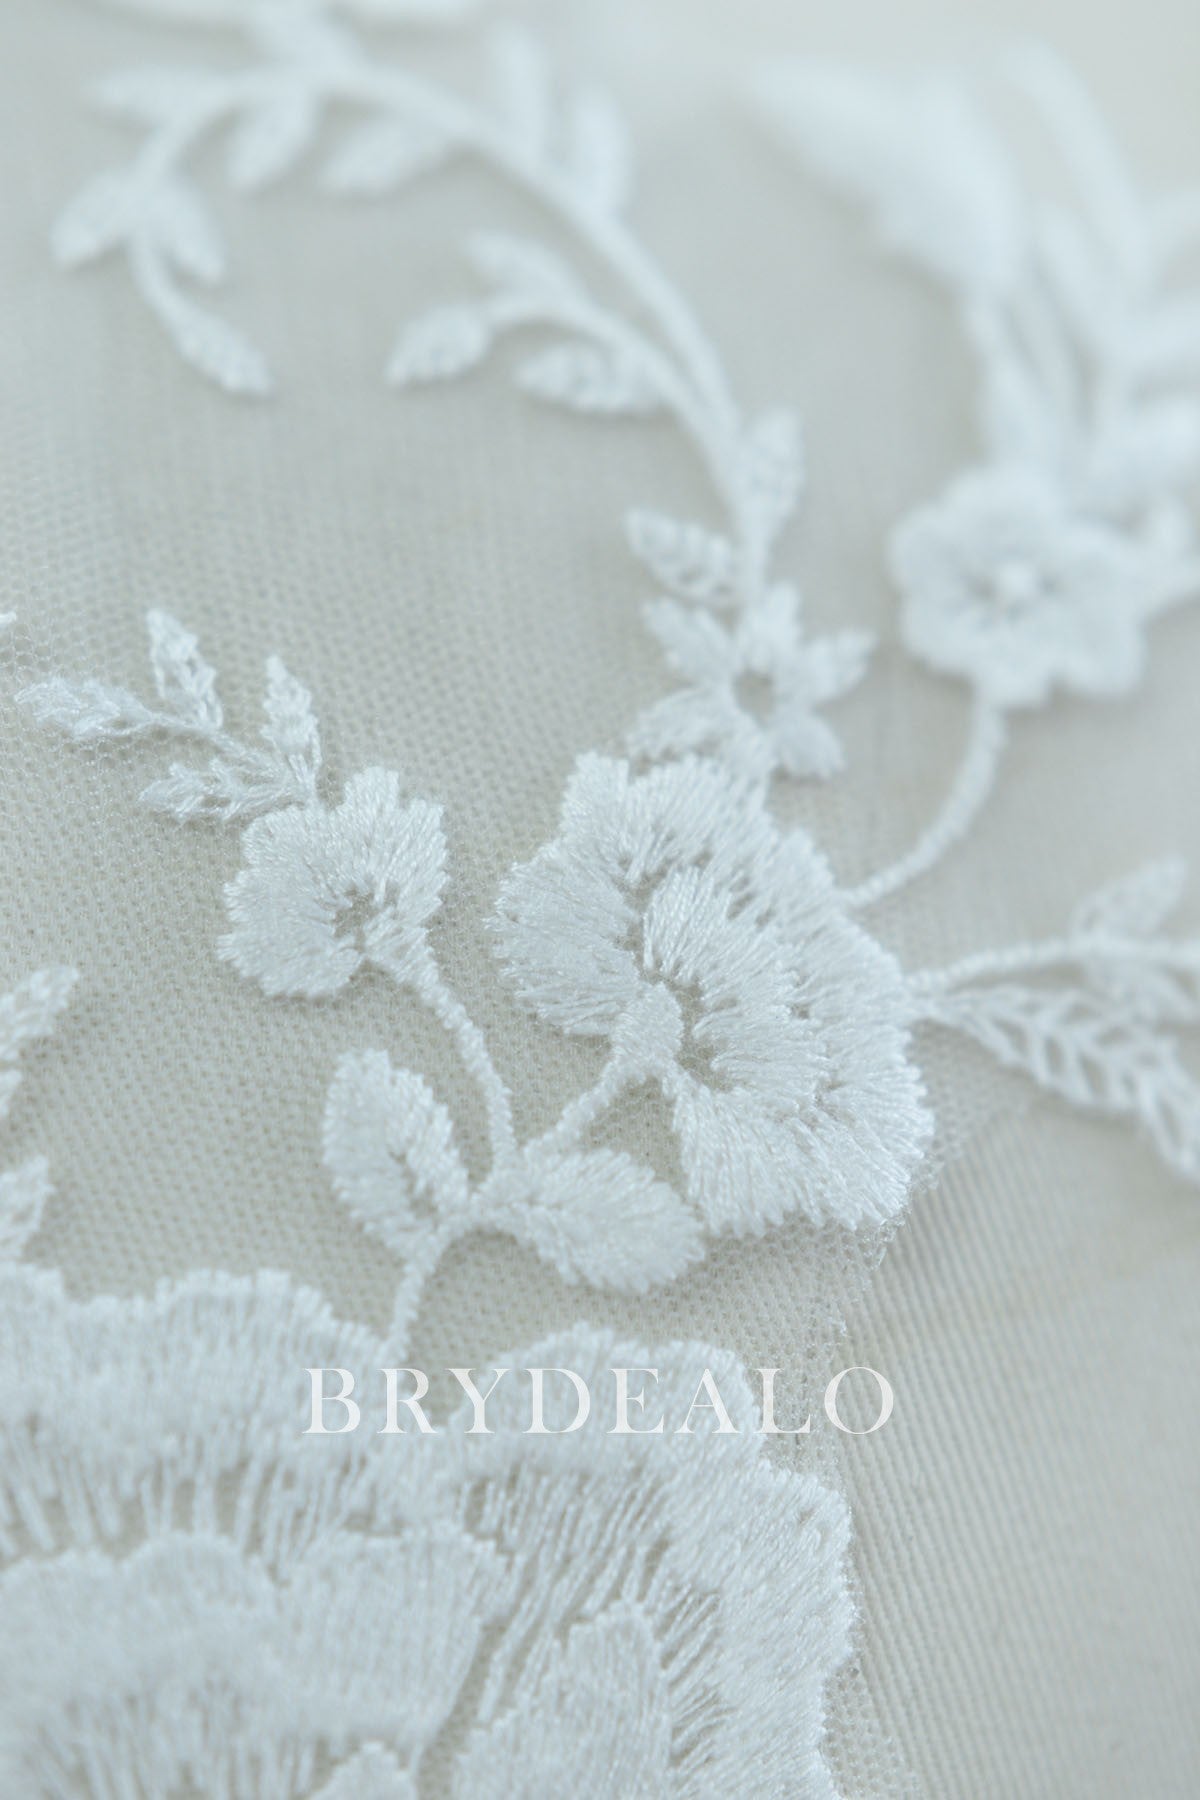 Wholesale Embroidered Rosa Bridal Lace Applique